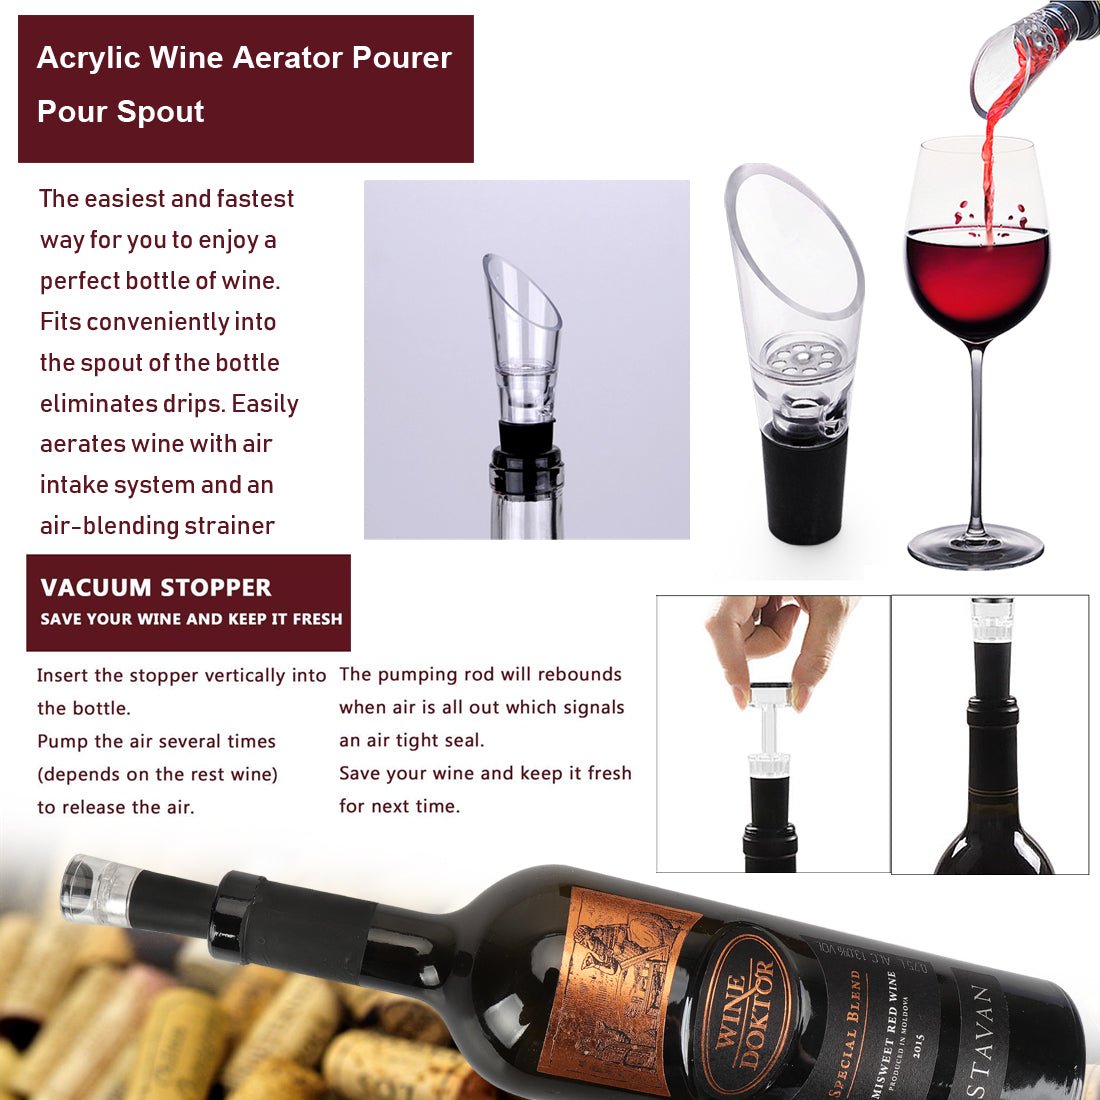 Acrylic Wine Aerator Pourer | Vacuum Stopper